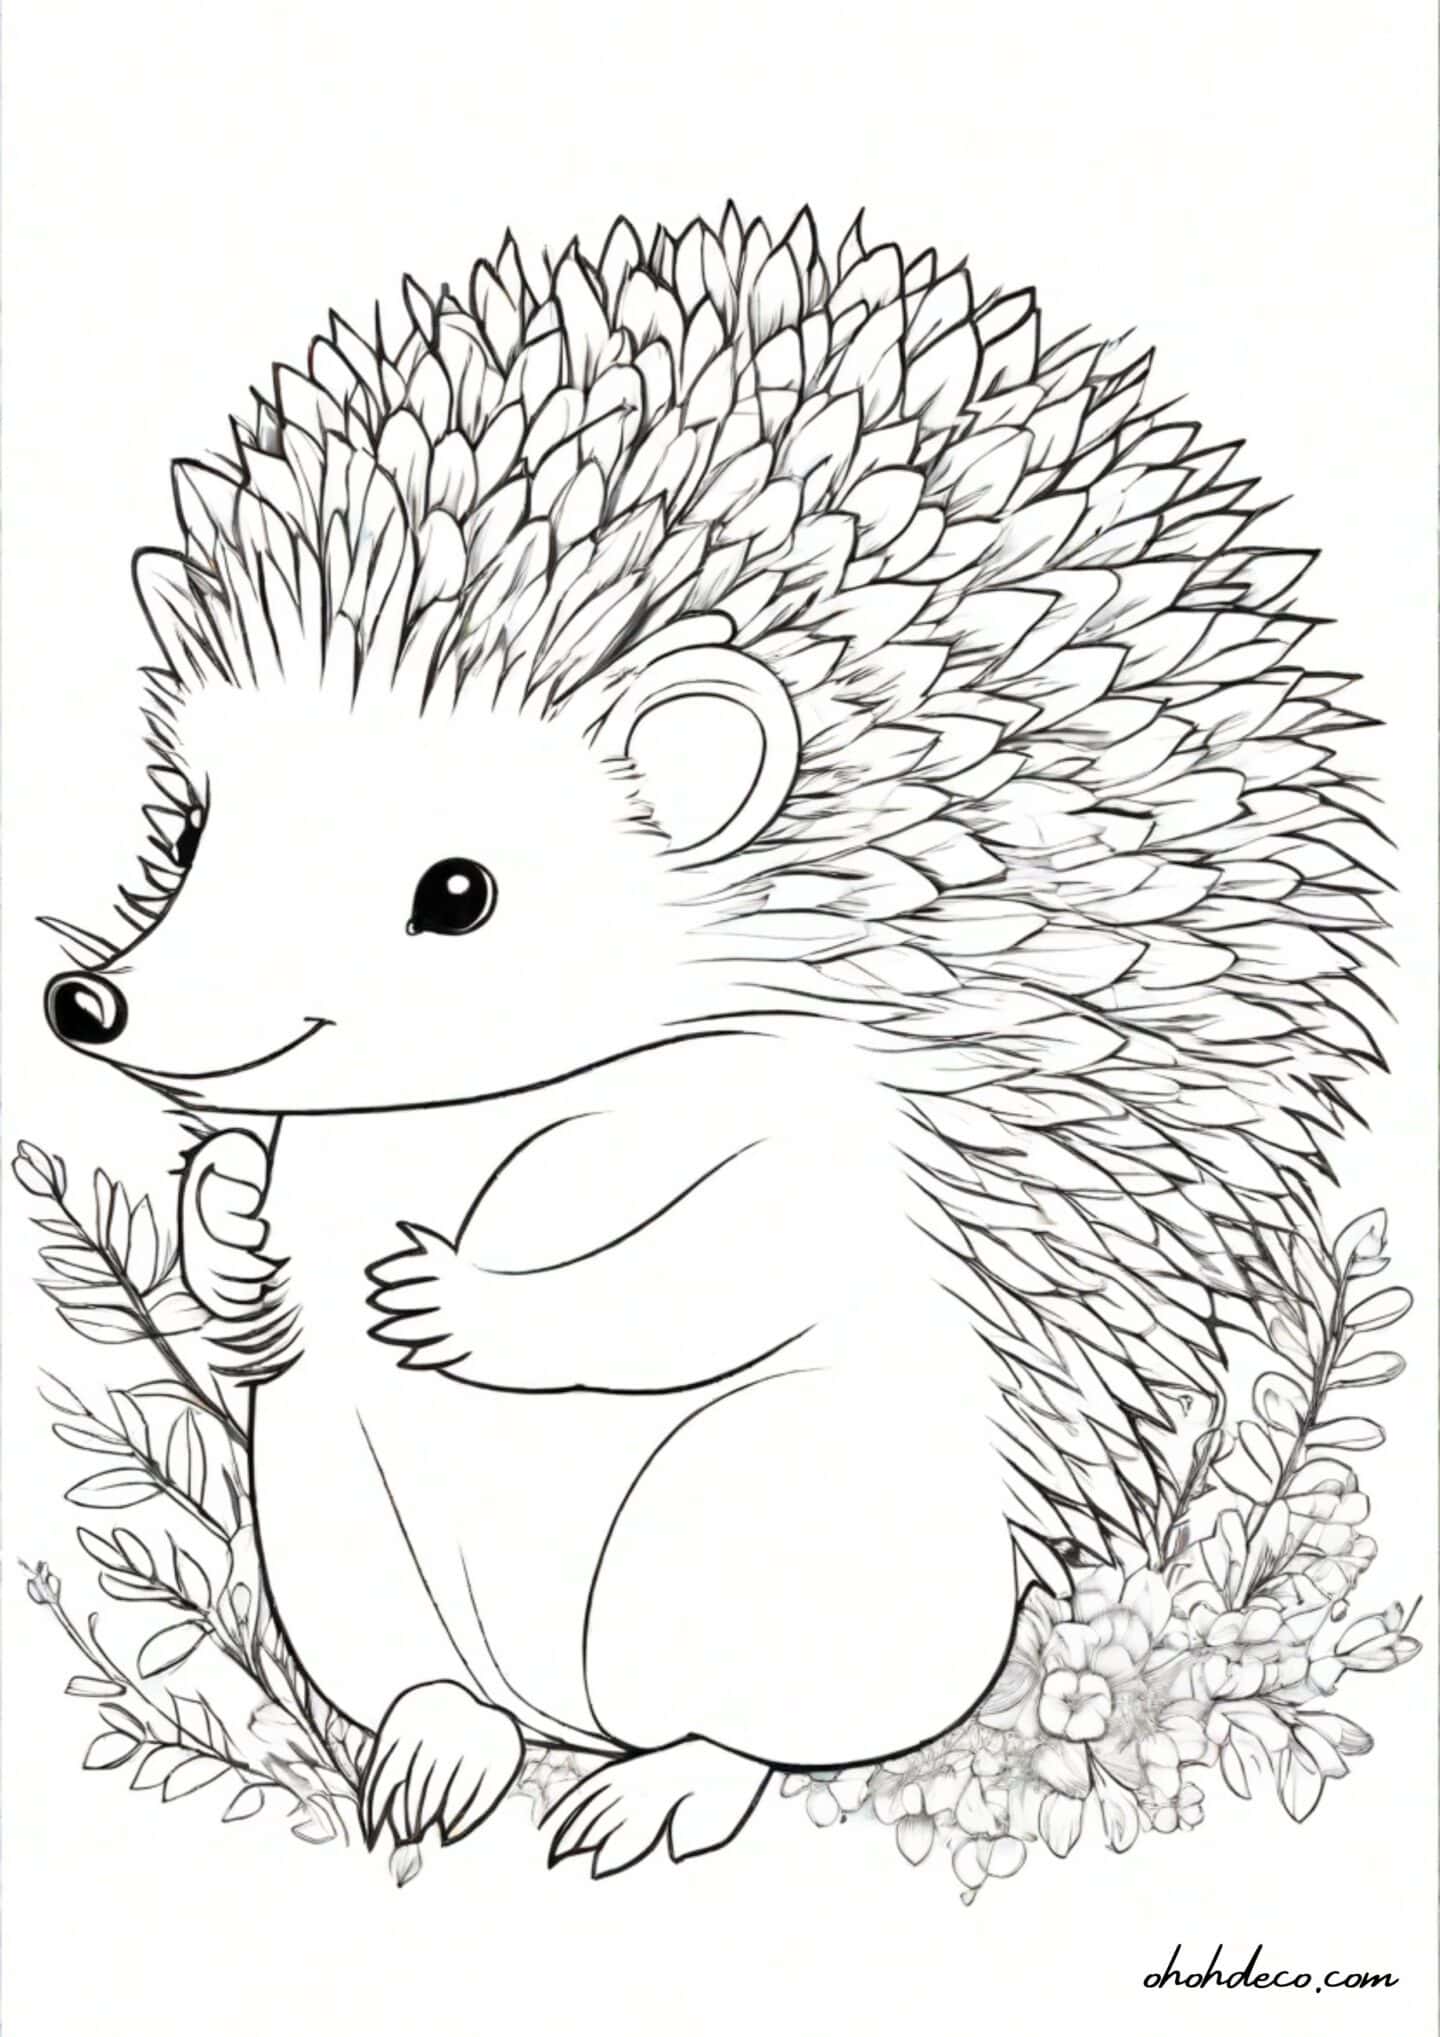 hedgehog coloring page